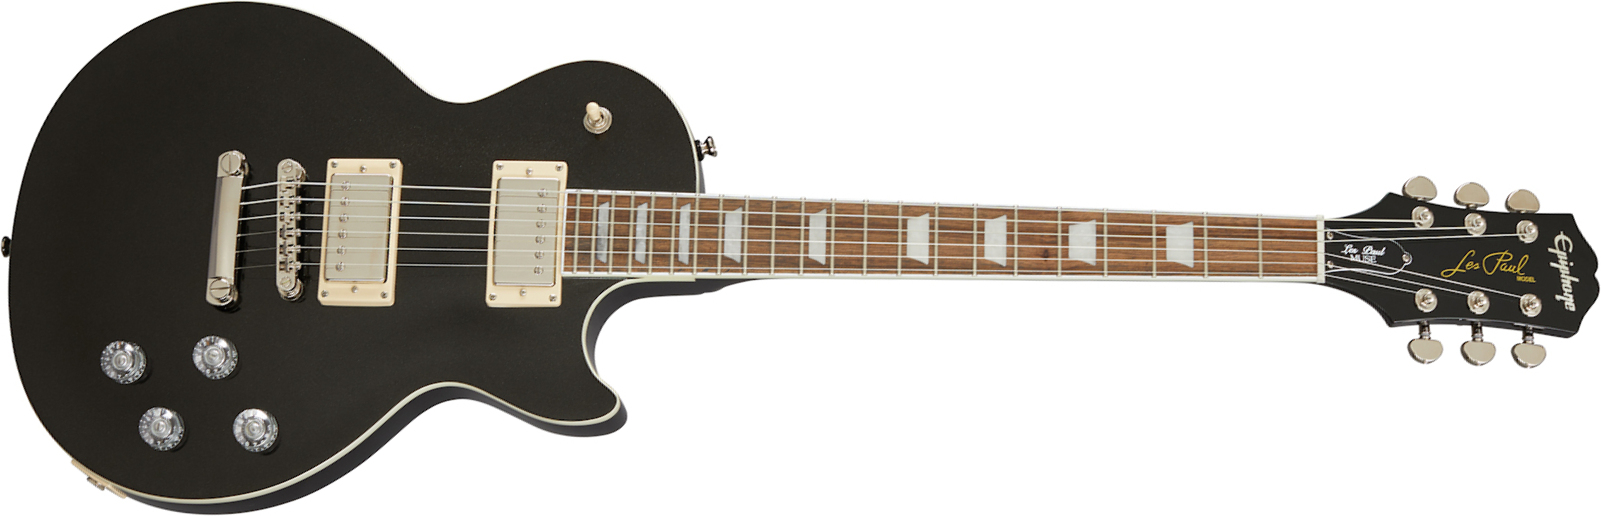 Epiphone Les Paul Muse Modern 2h Ht Lau - Jet Black Metallic - Guitarra eléctrica de corte único. - Main picture